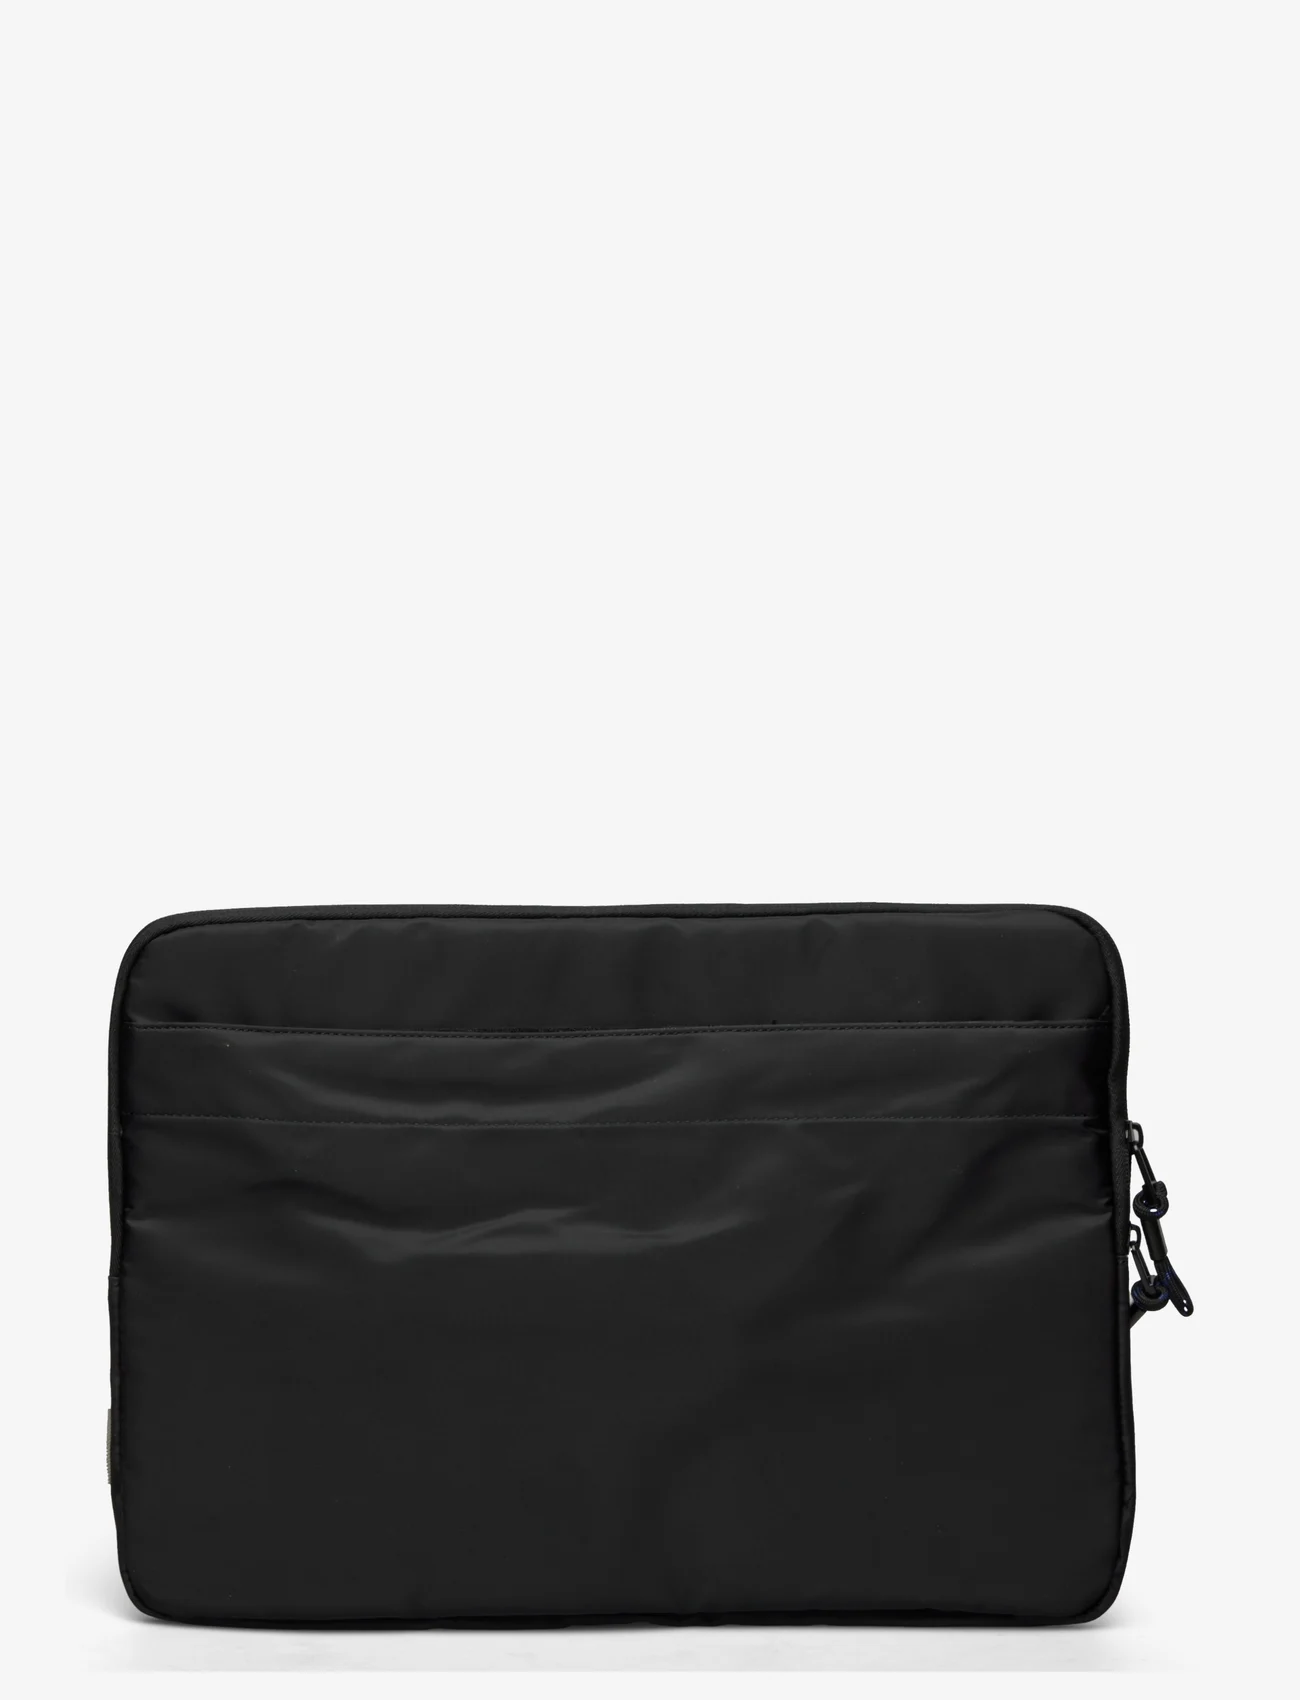 Taikan - Horsa-Black - laptop bags - black - 0